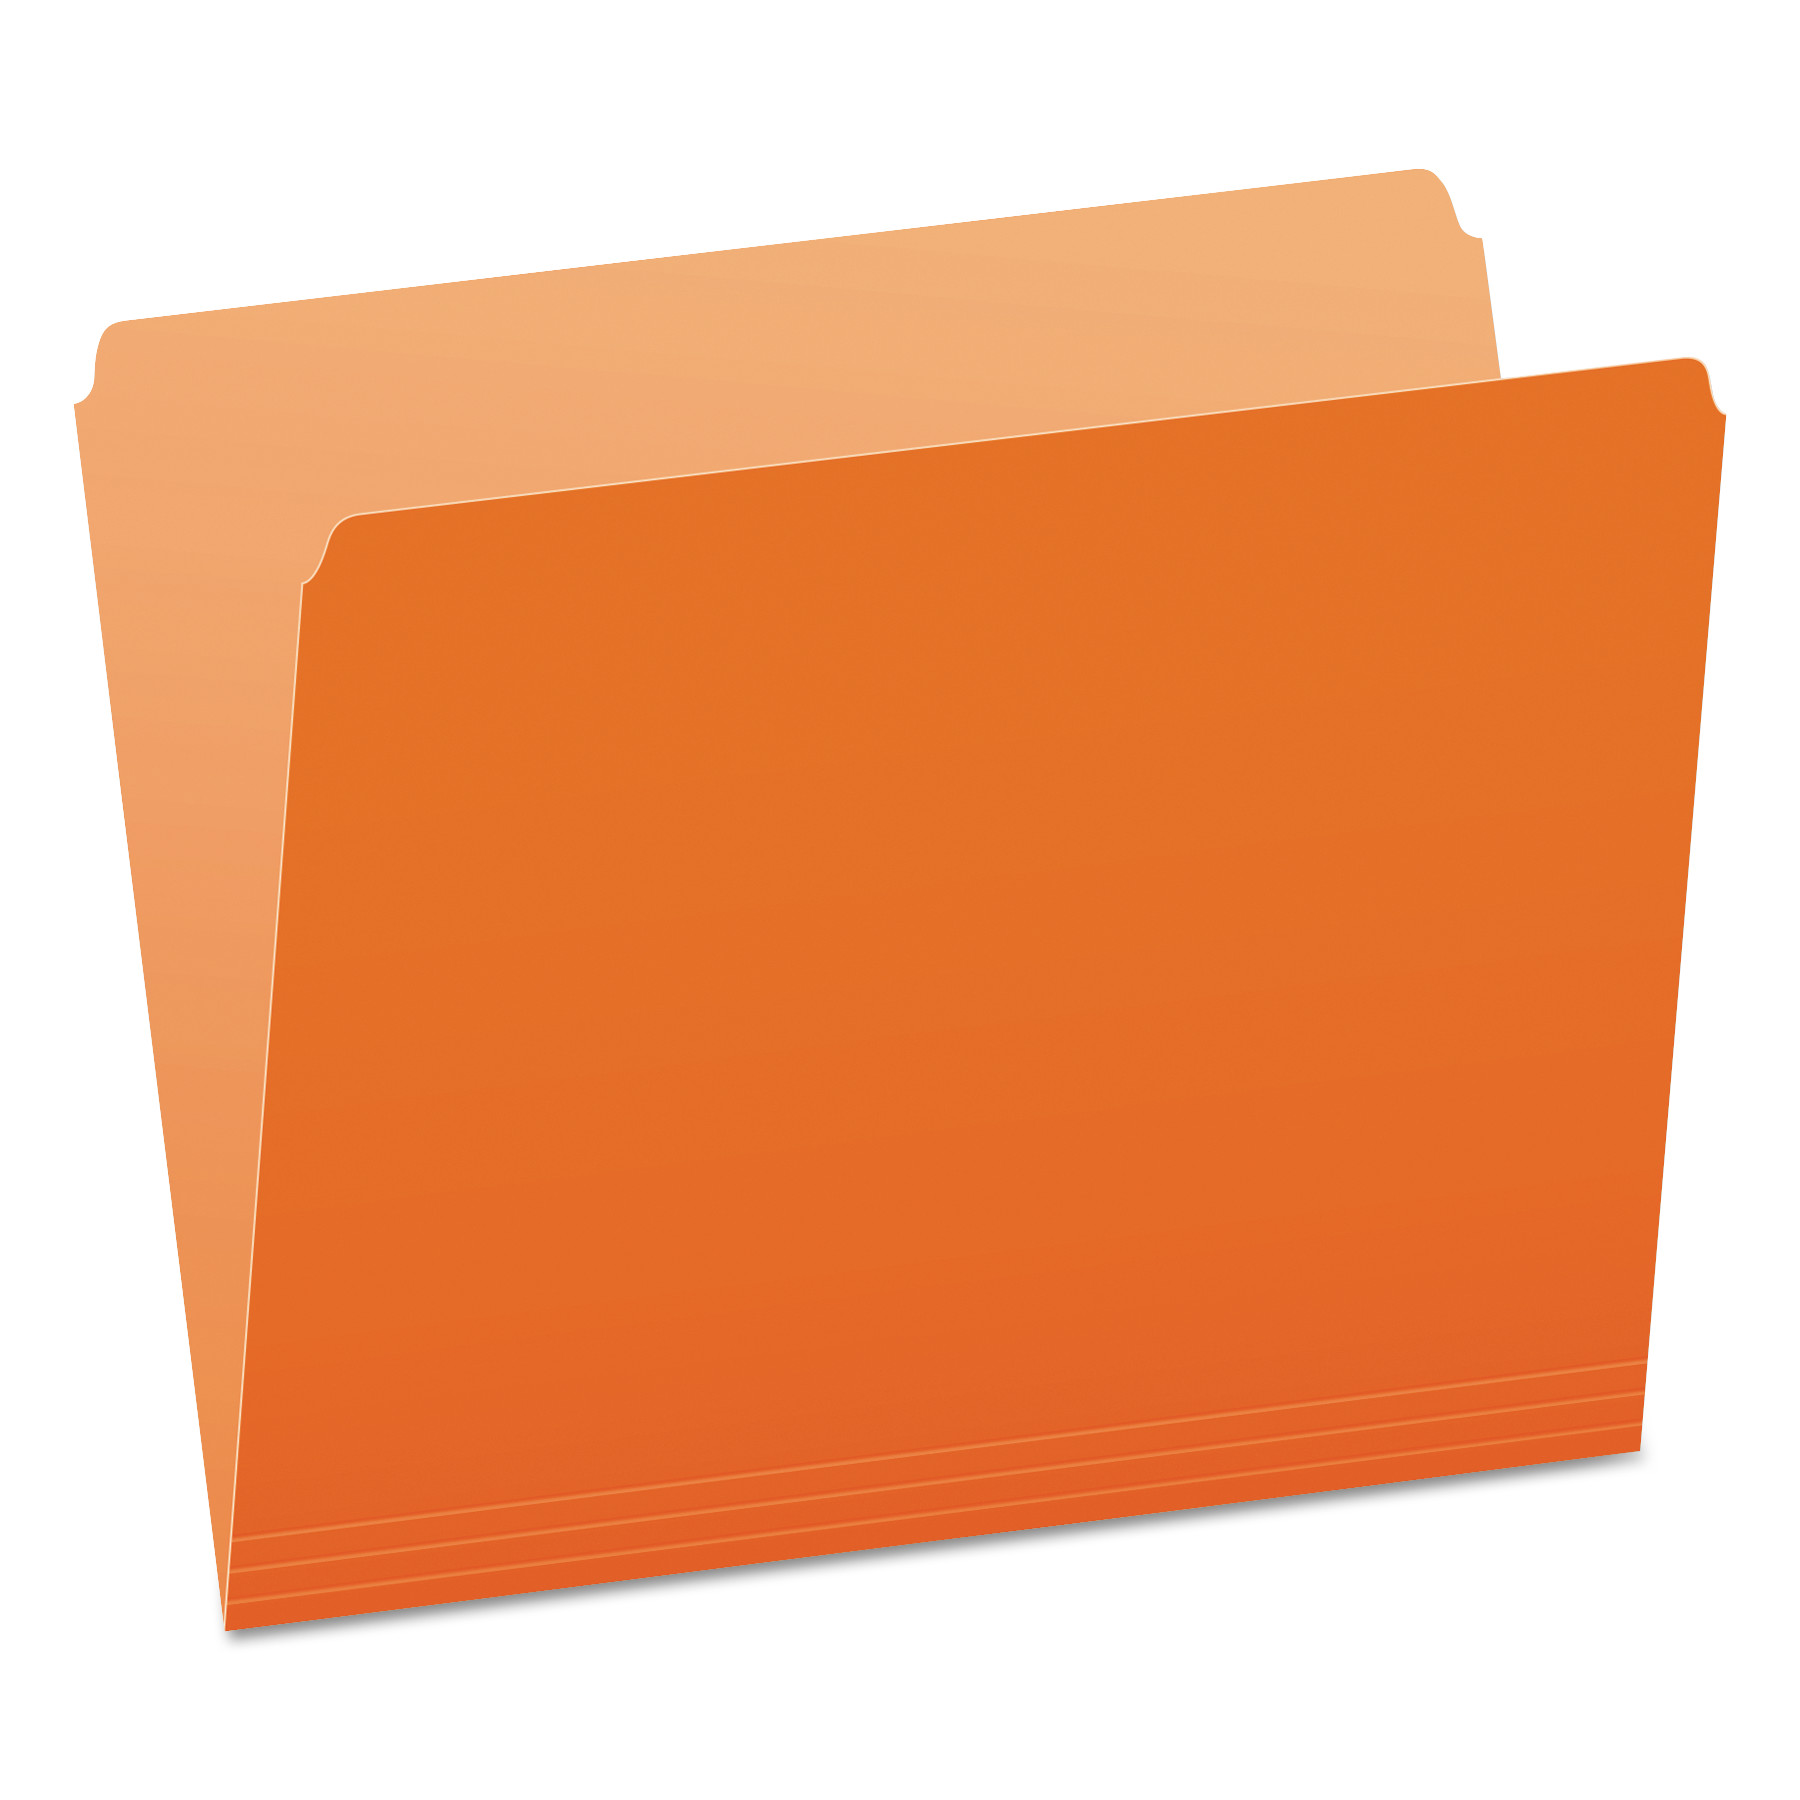  Pendaflex 152 ORA Colored File Folders, Straight Tab, Letter Size, Orange/Light Orange, 100/Box (PFX152ORA) 